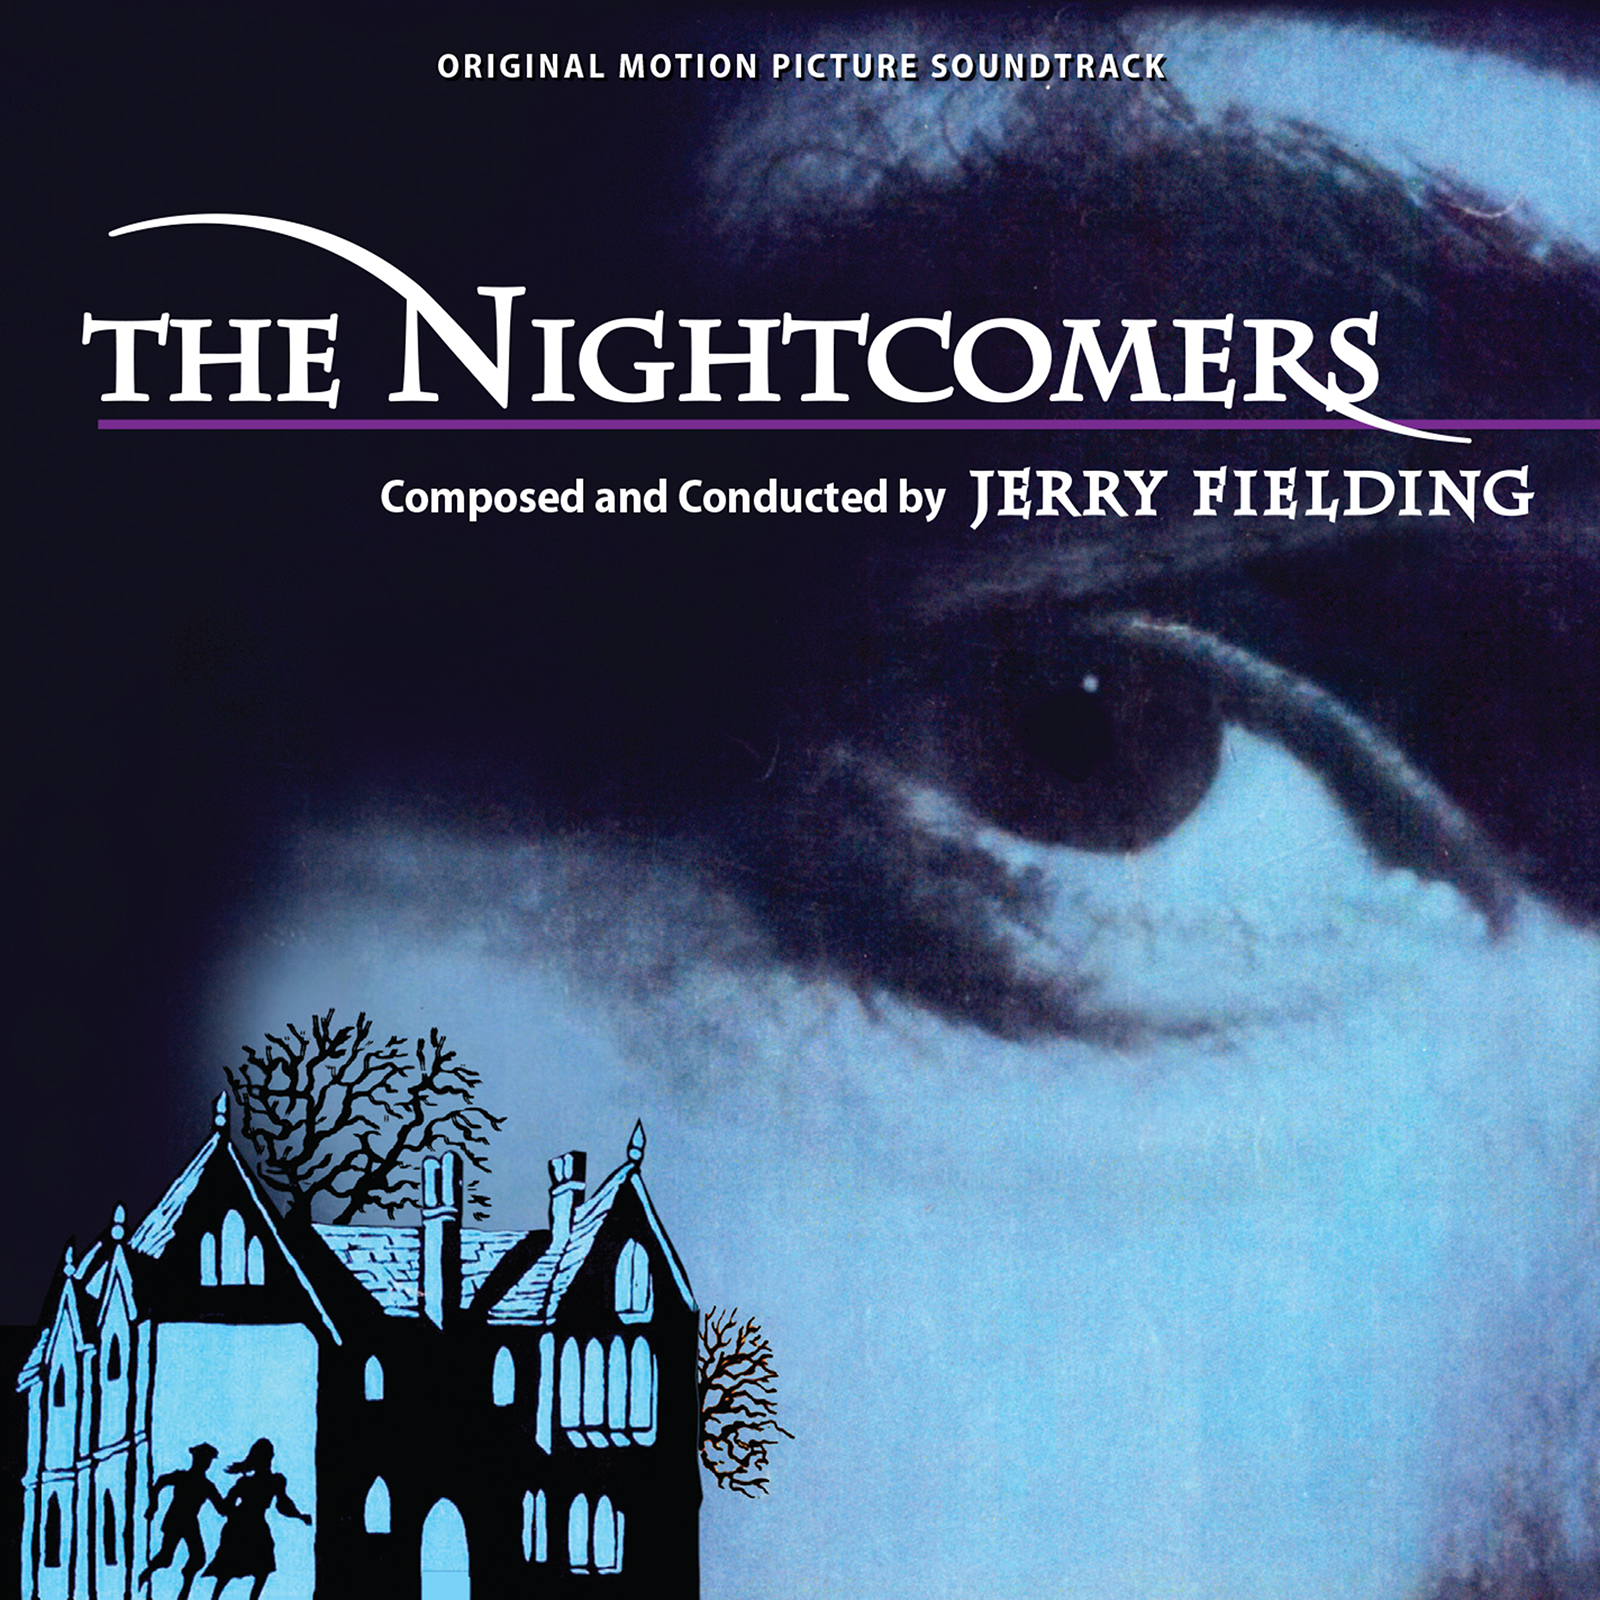 Intrada reedita The Nightcomers de Jerry Fielding